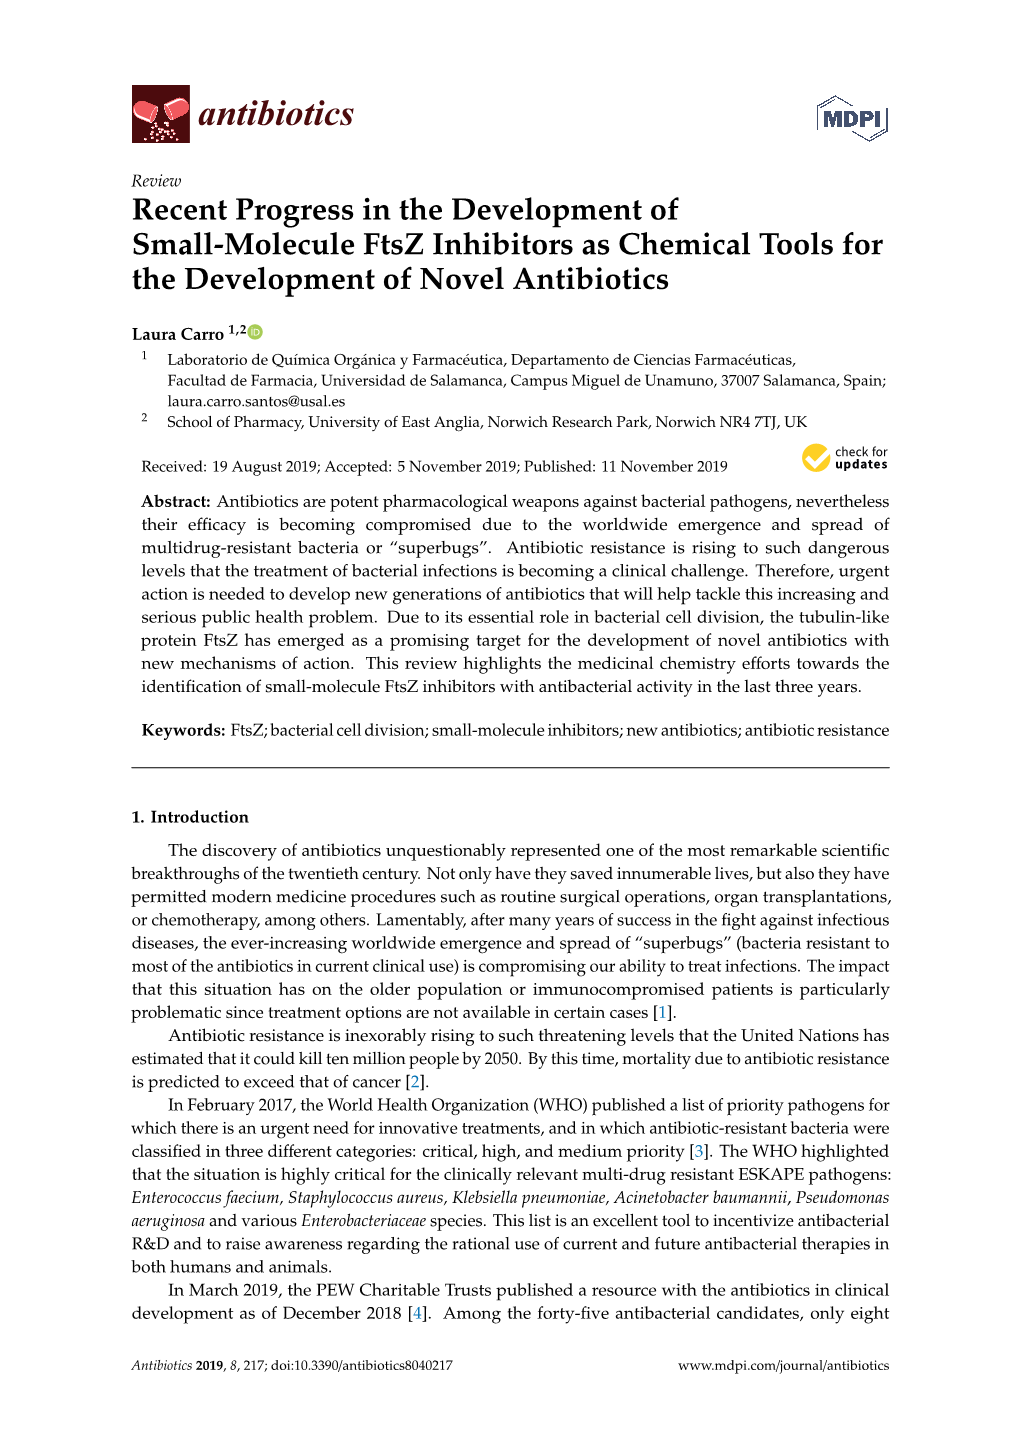 Recent Progress in the Development of Small-Molecule Ftsz Inhibitors As Chemical Tools for the Development of Novel Antibiotics